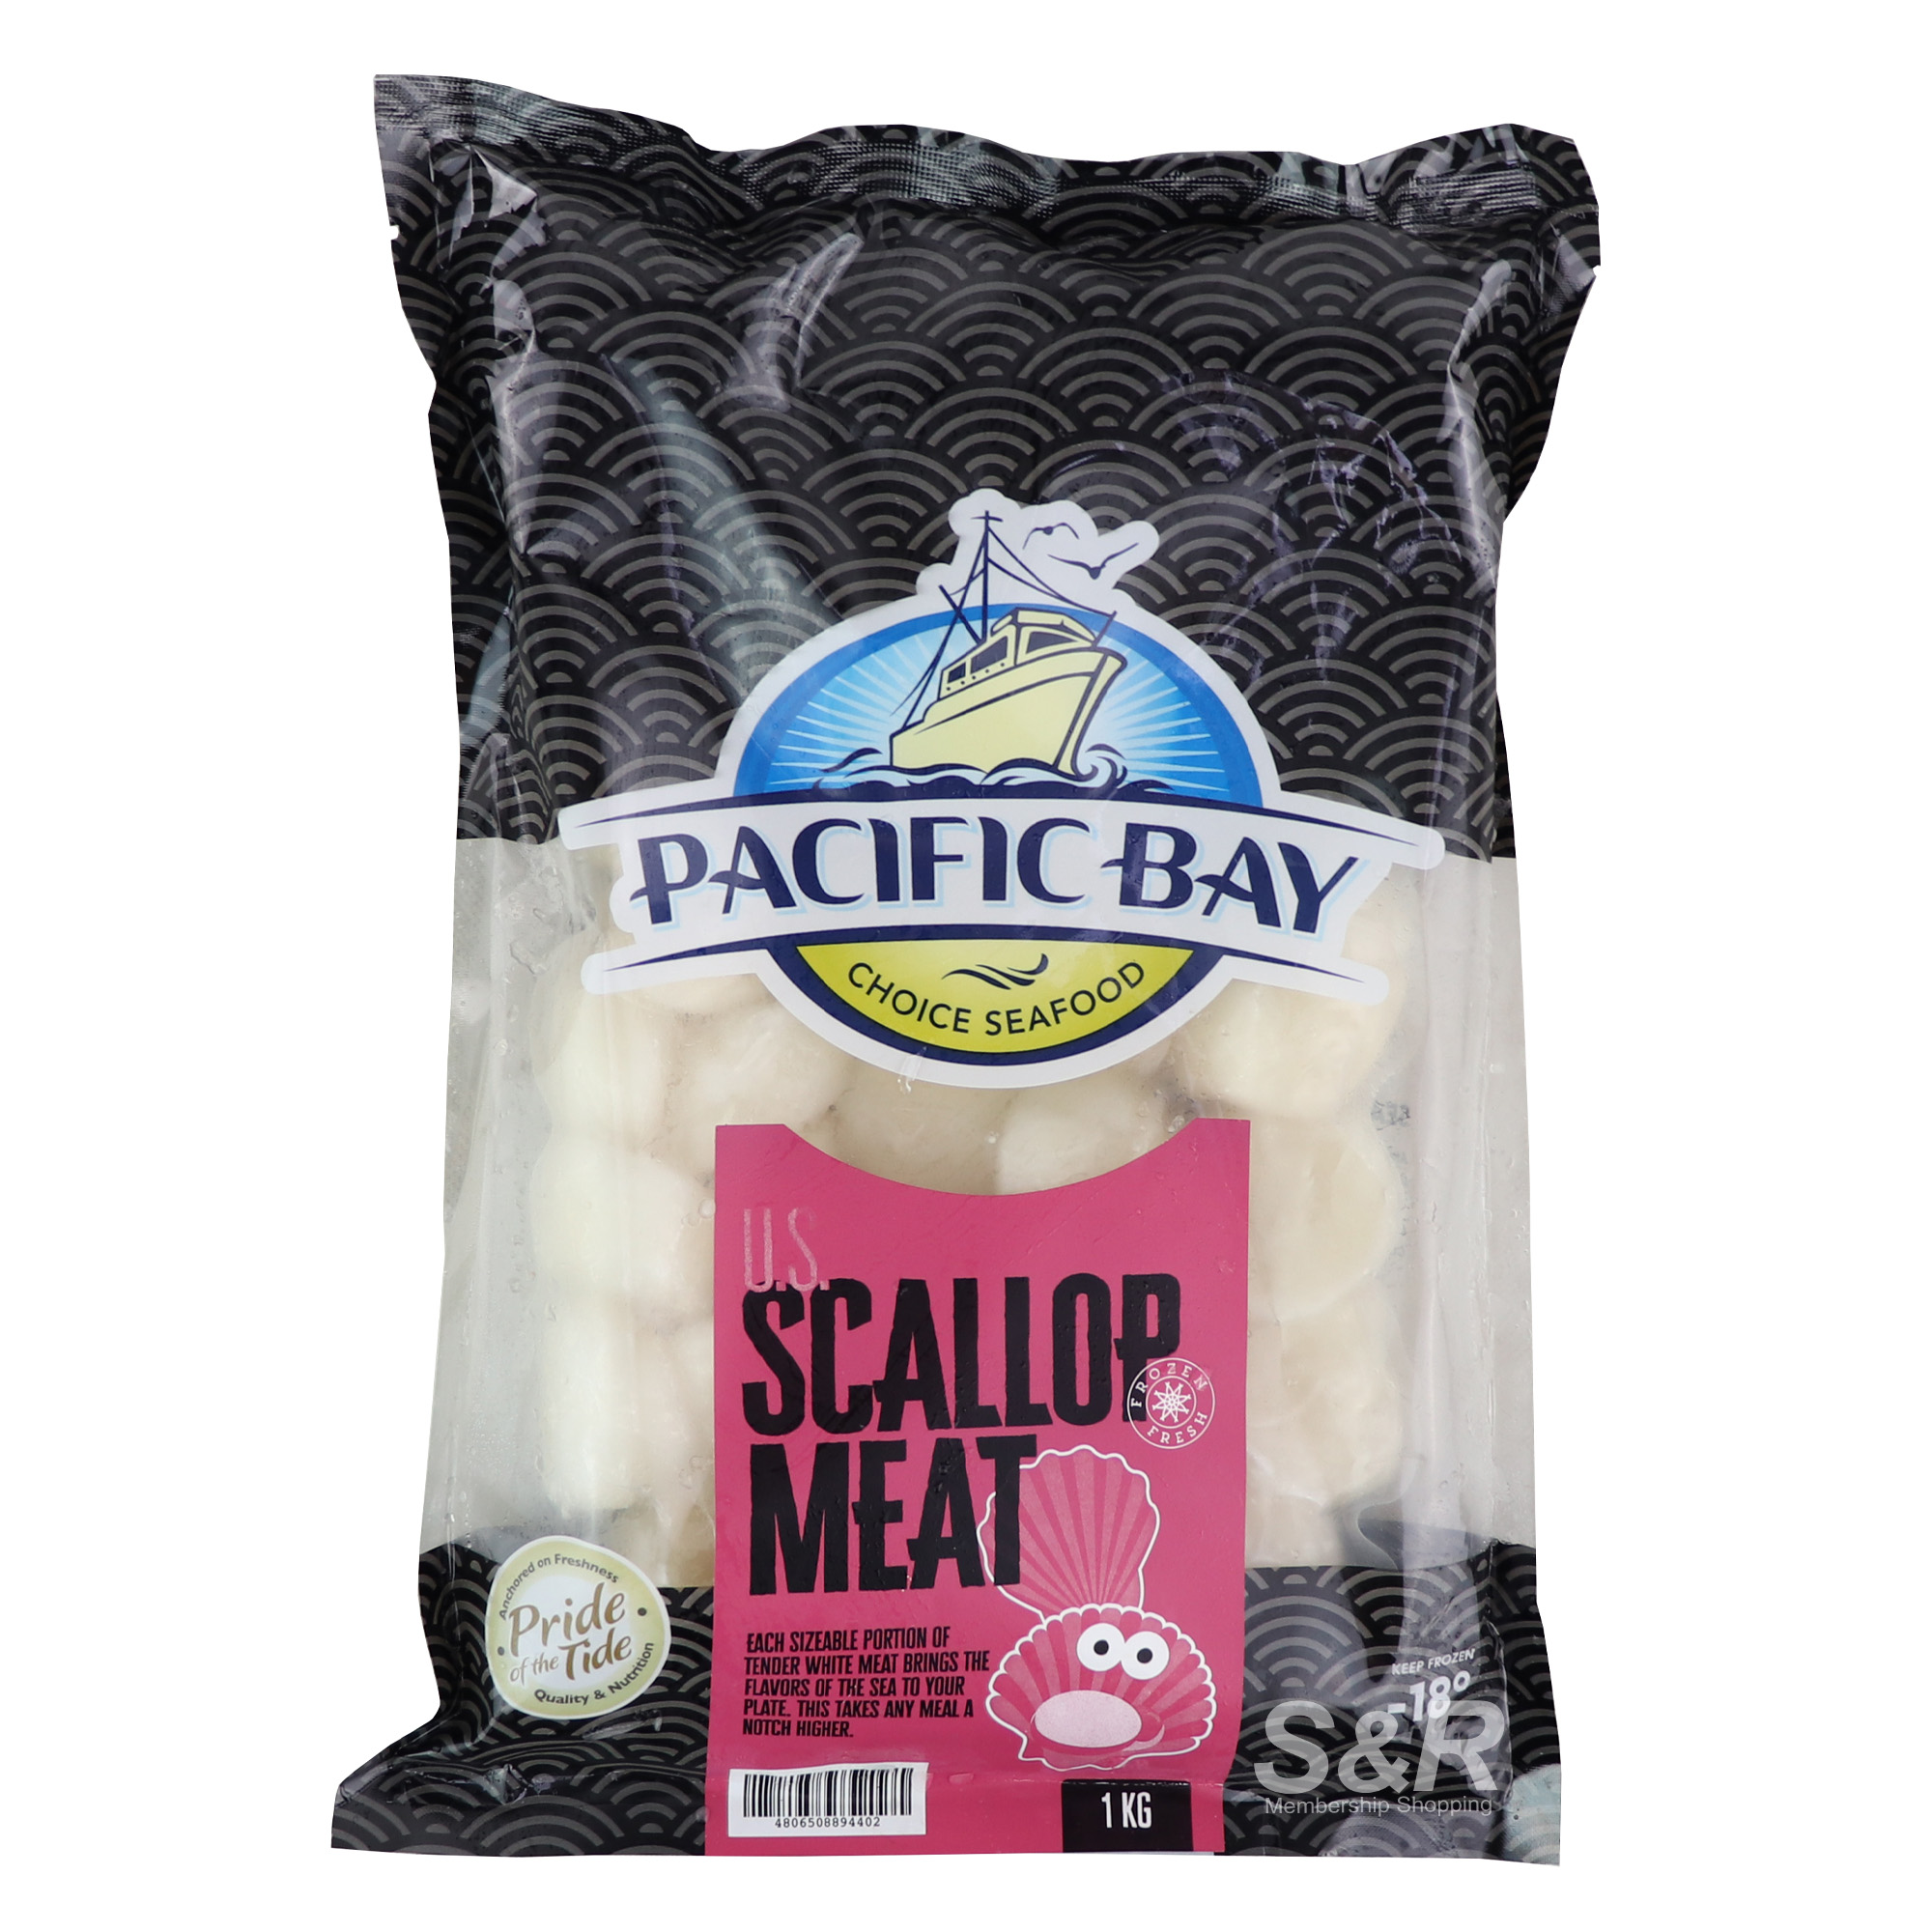 Pacific Bay U.S. Scallop Meat 1kg